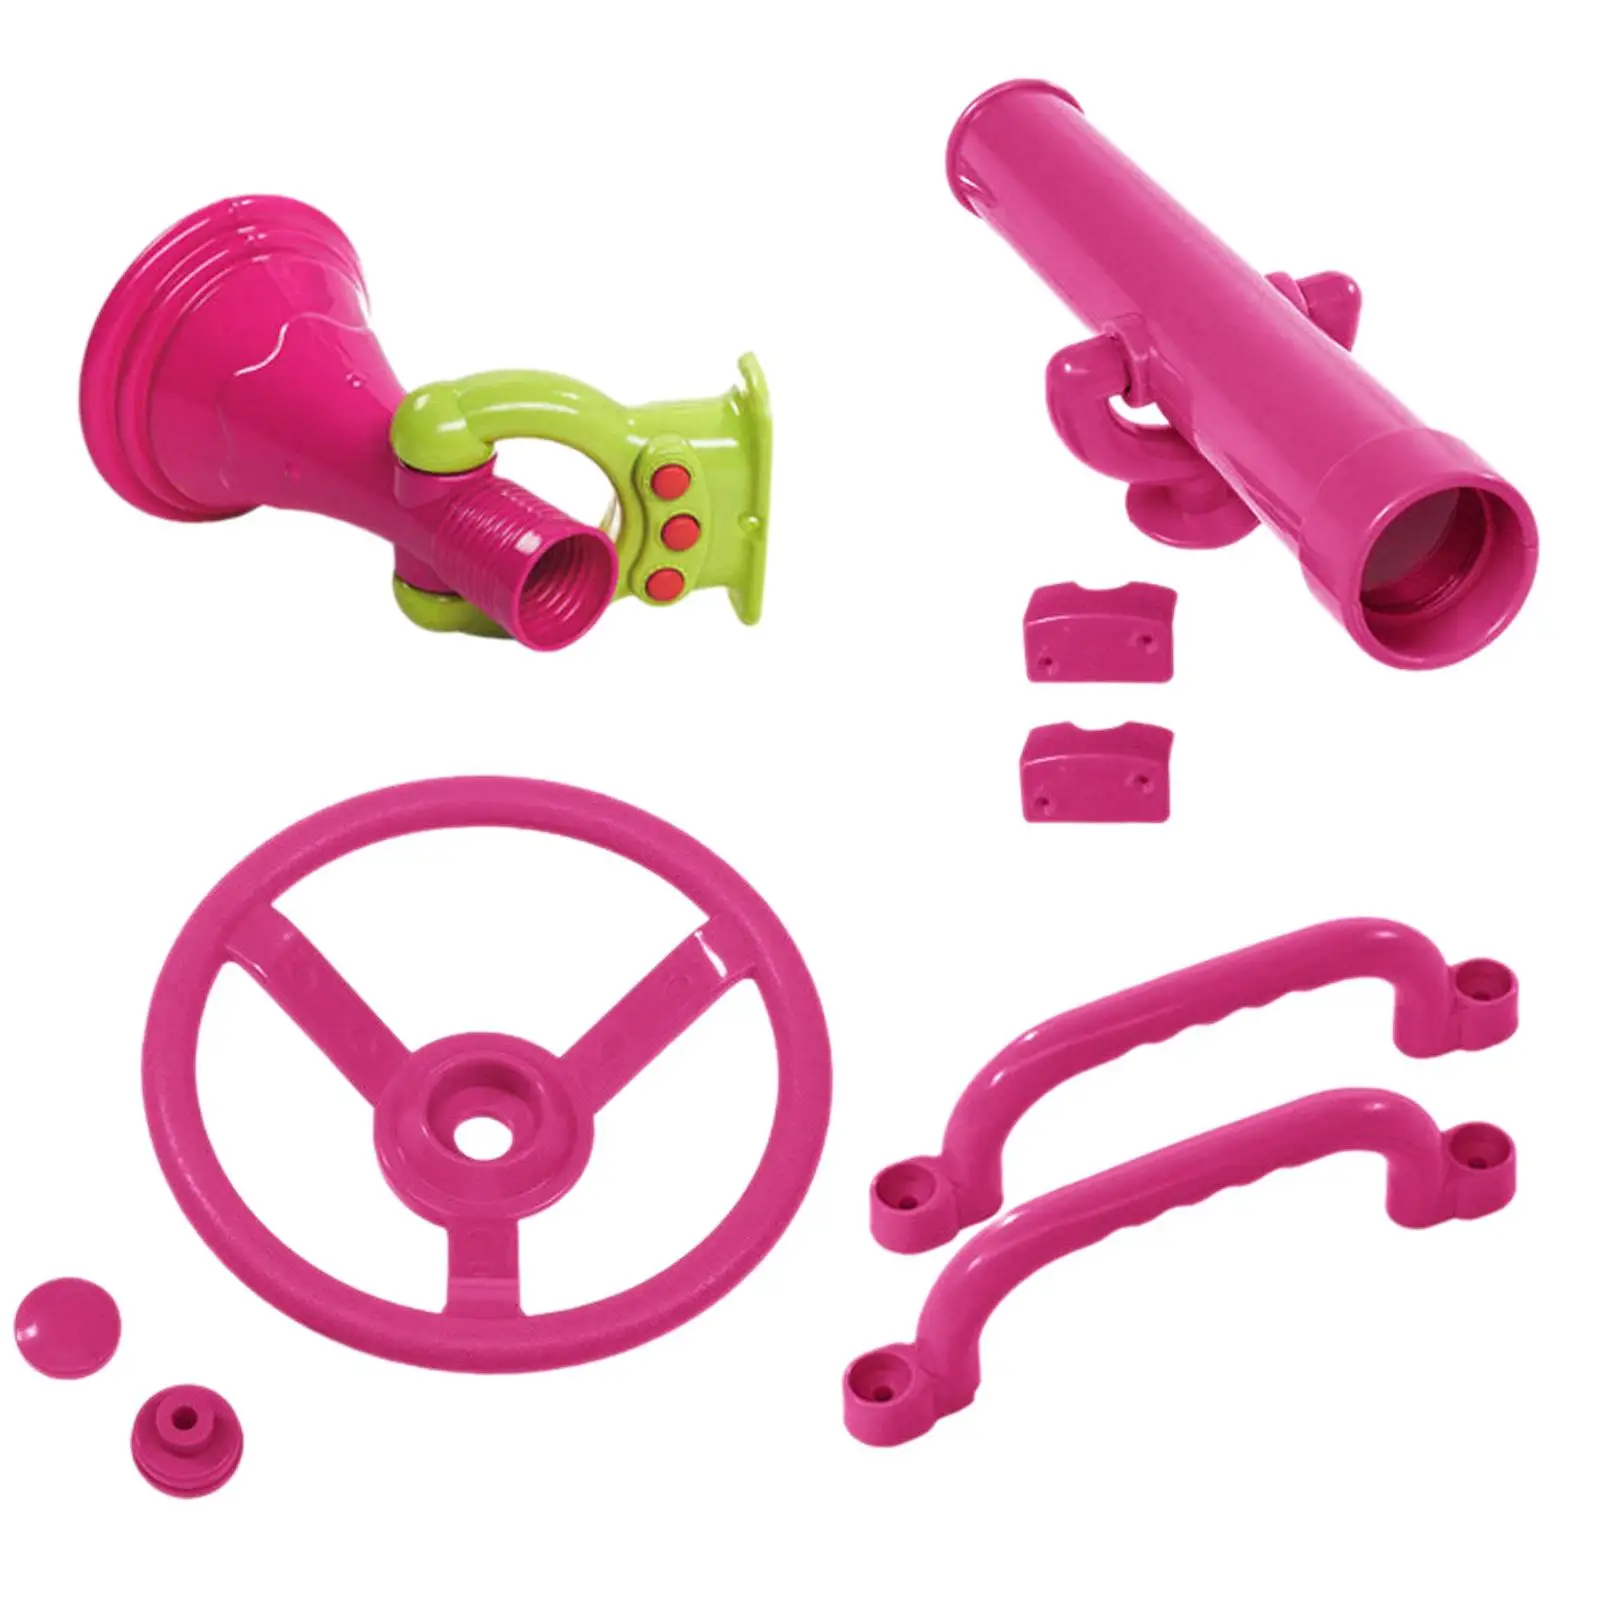 4x Playground Accessories Pink Outdoor Playground Accessories for Backyard